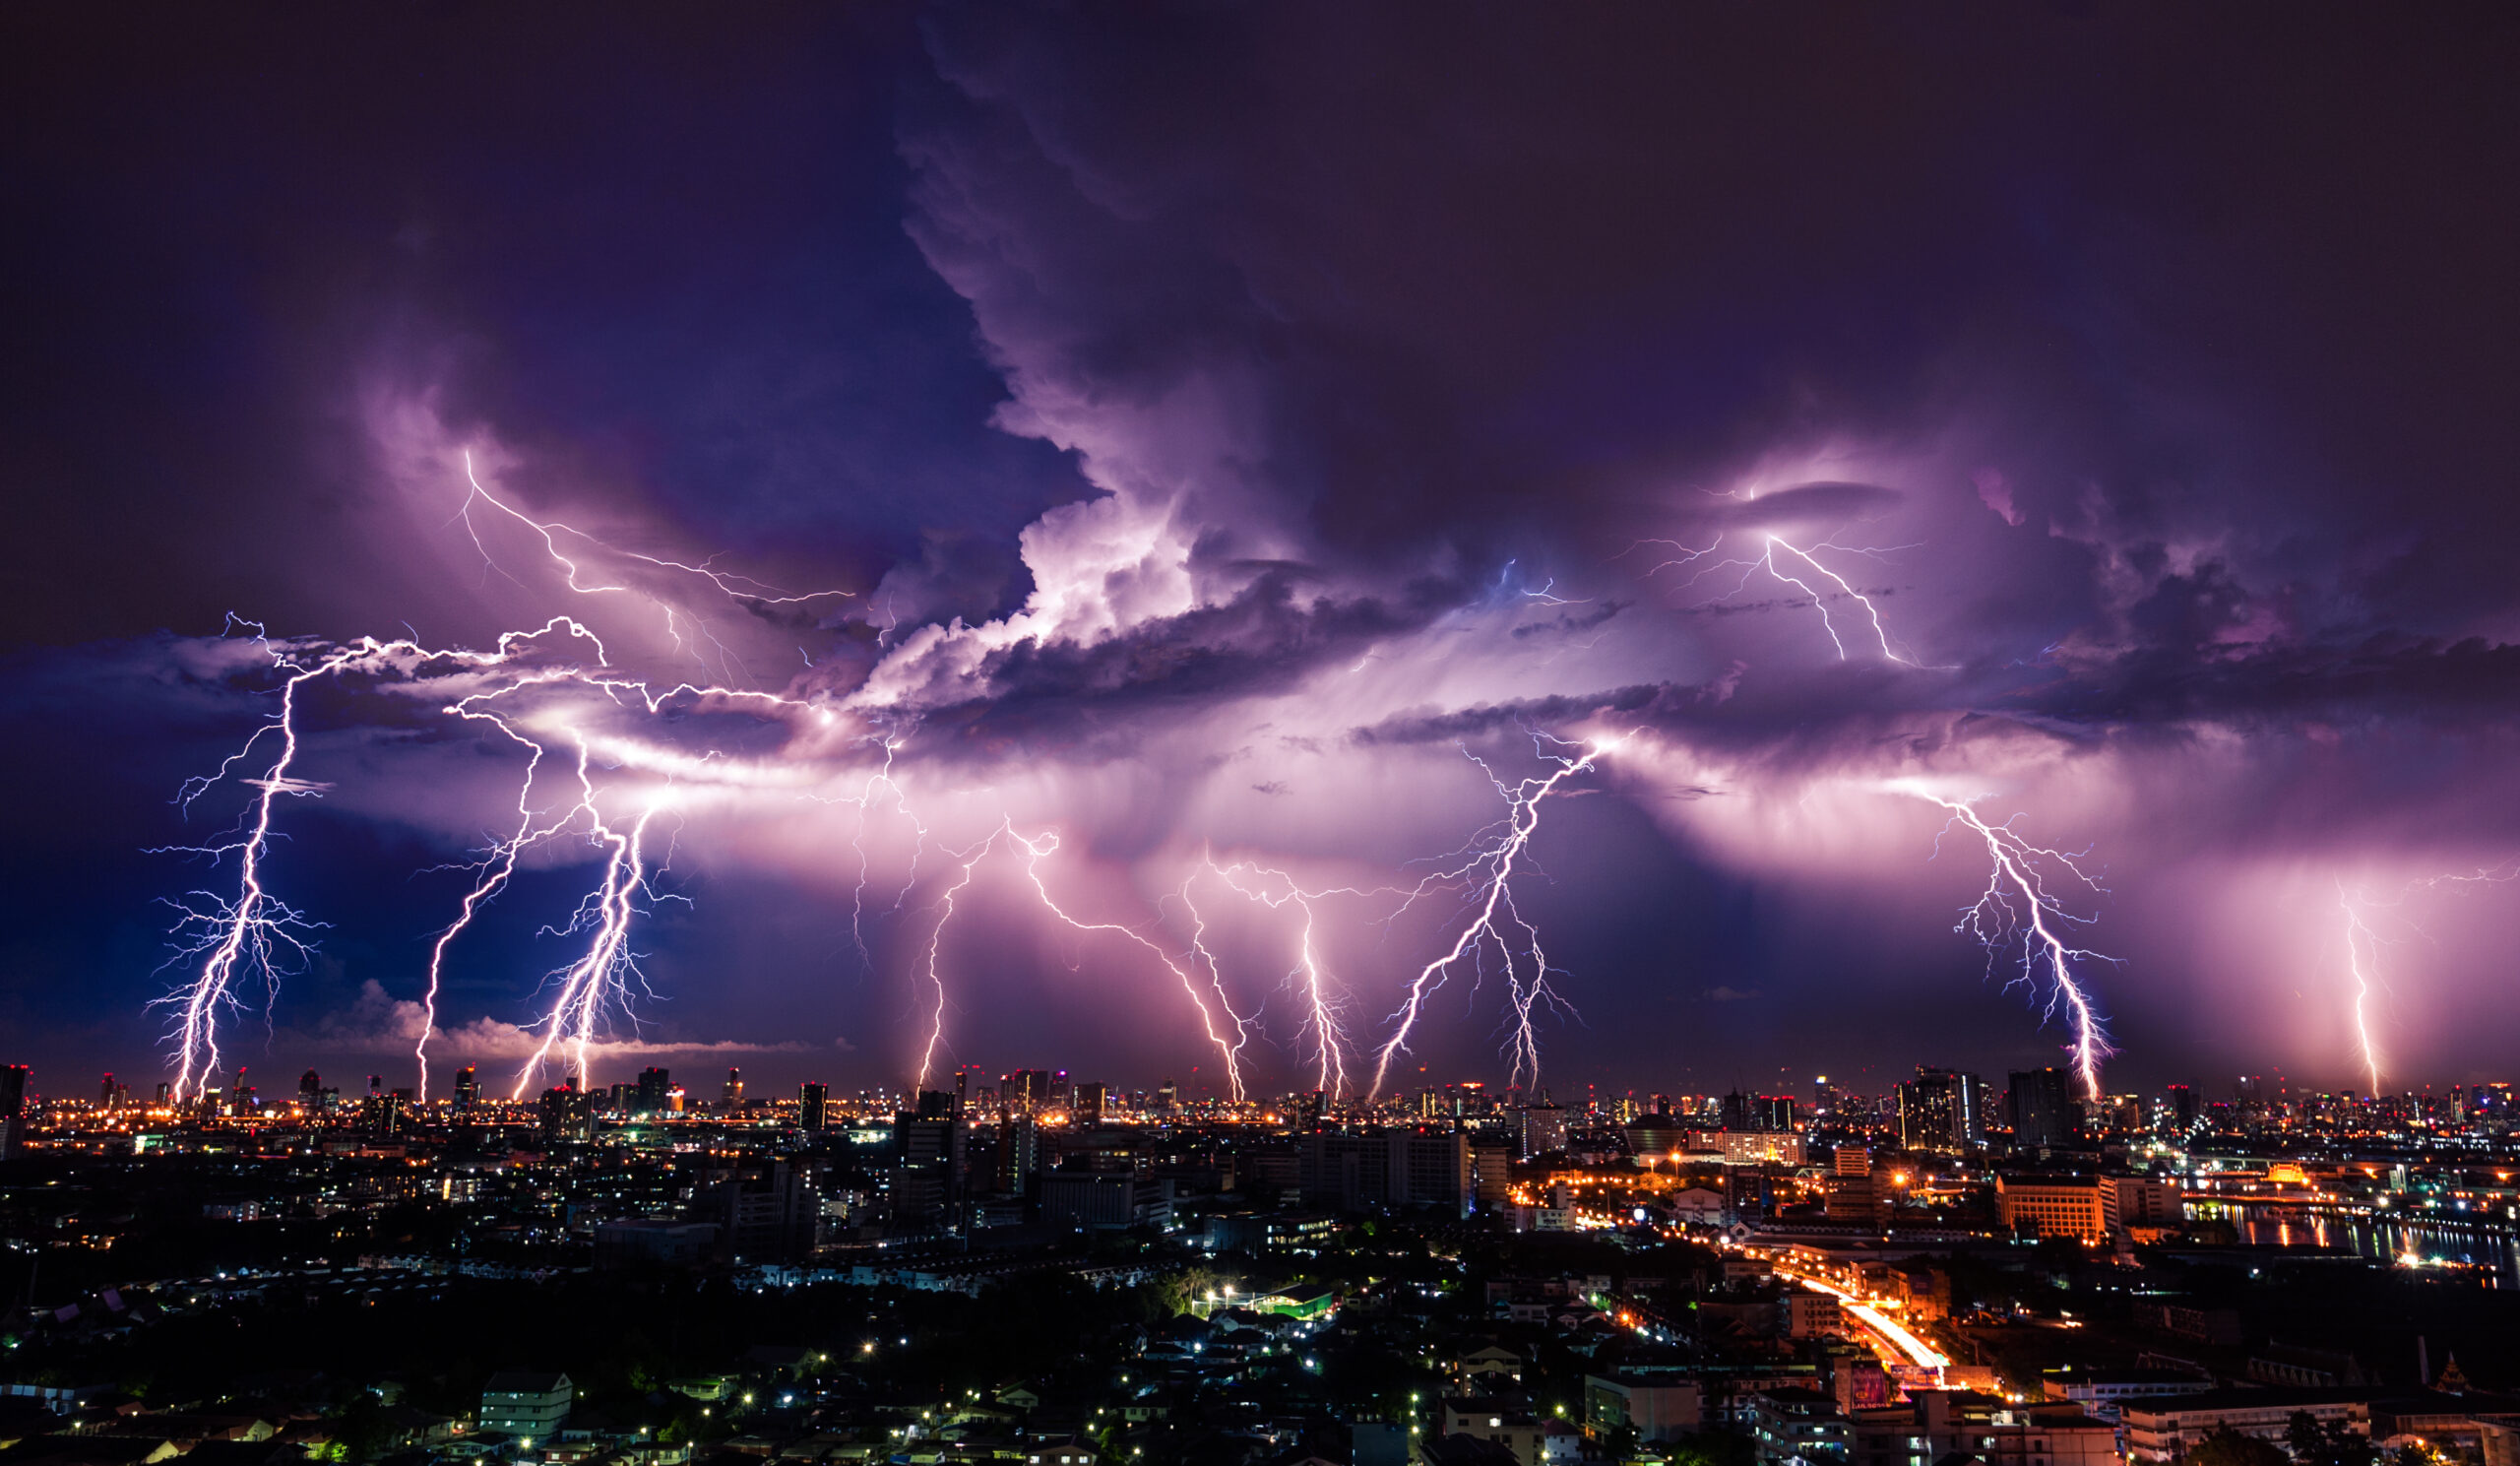 Lightning storm over city in purple light - TeknoTalk.